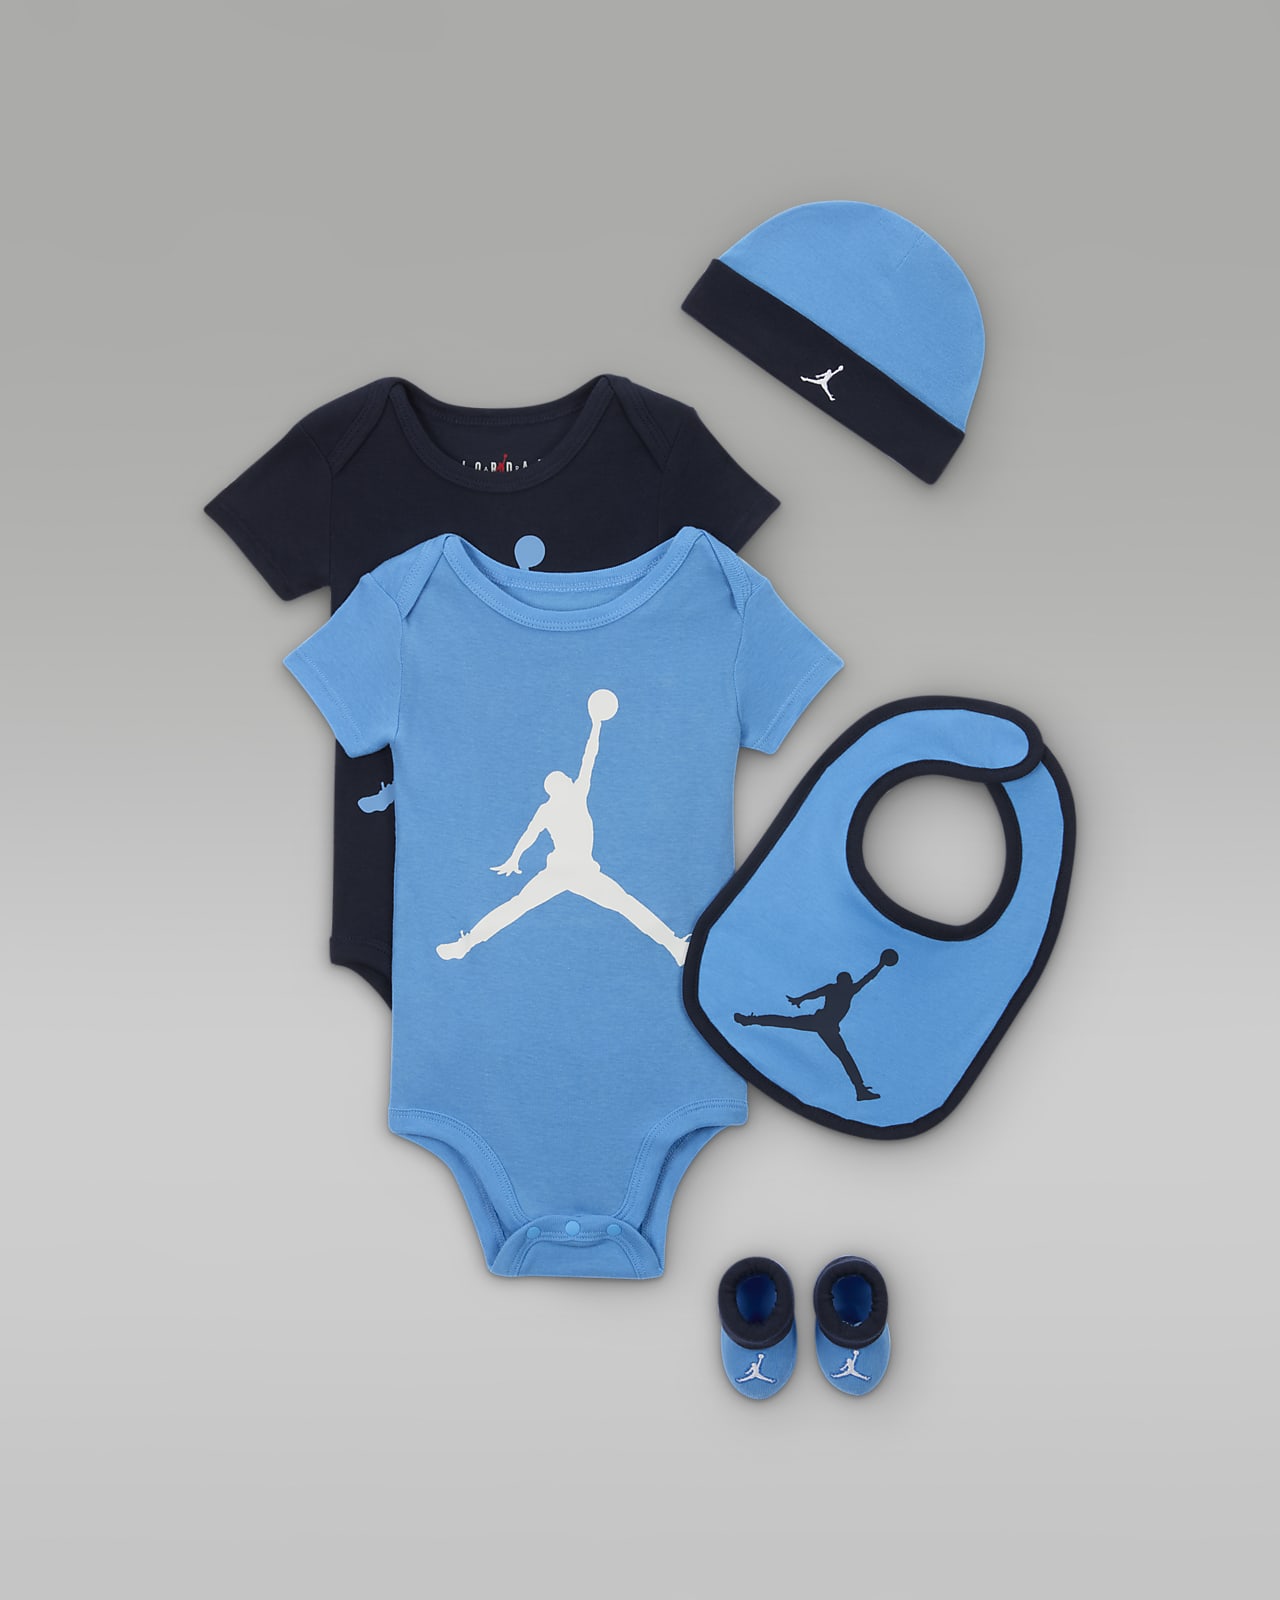 Jordan 5-Piece Core Gift Set Baby 5-Piece Bodysuit Boxed Set